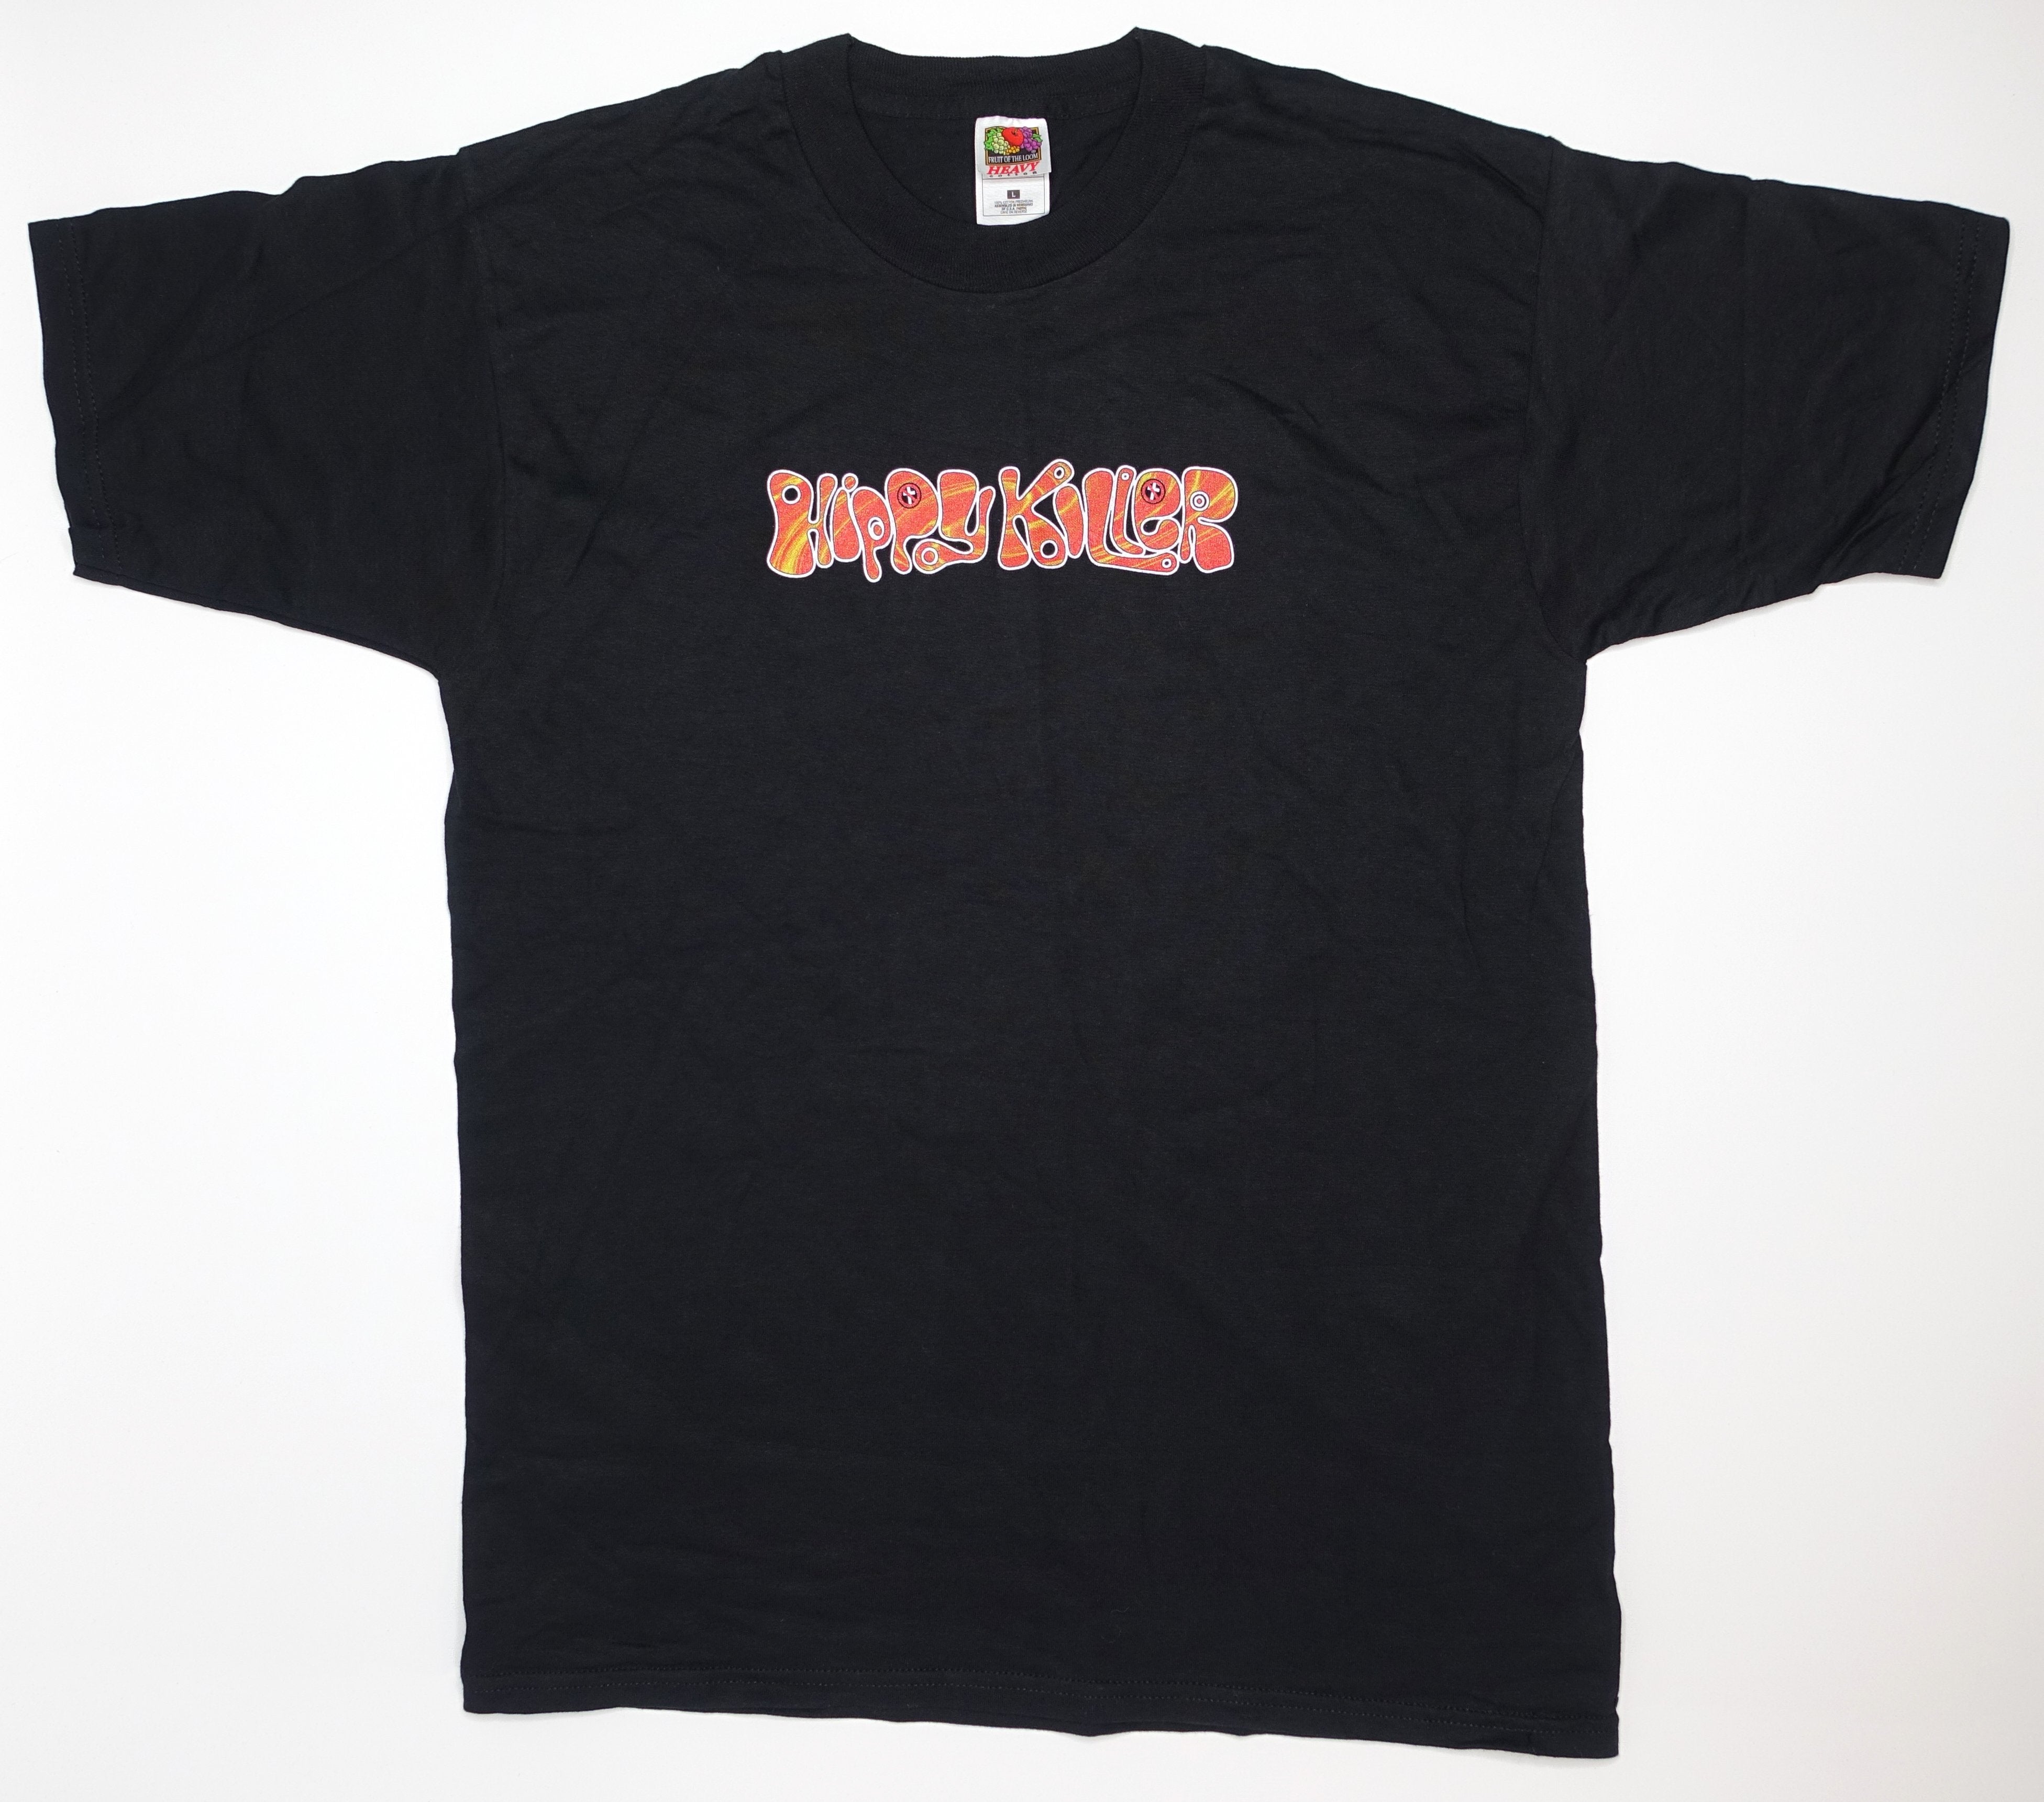 Bad Religion - Hippy Killer / No Substance 1998 Tour Shirt Size Large